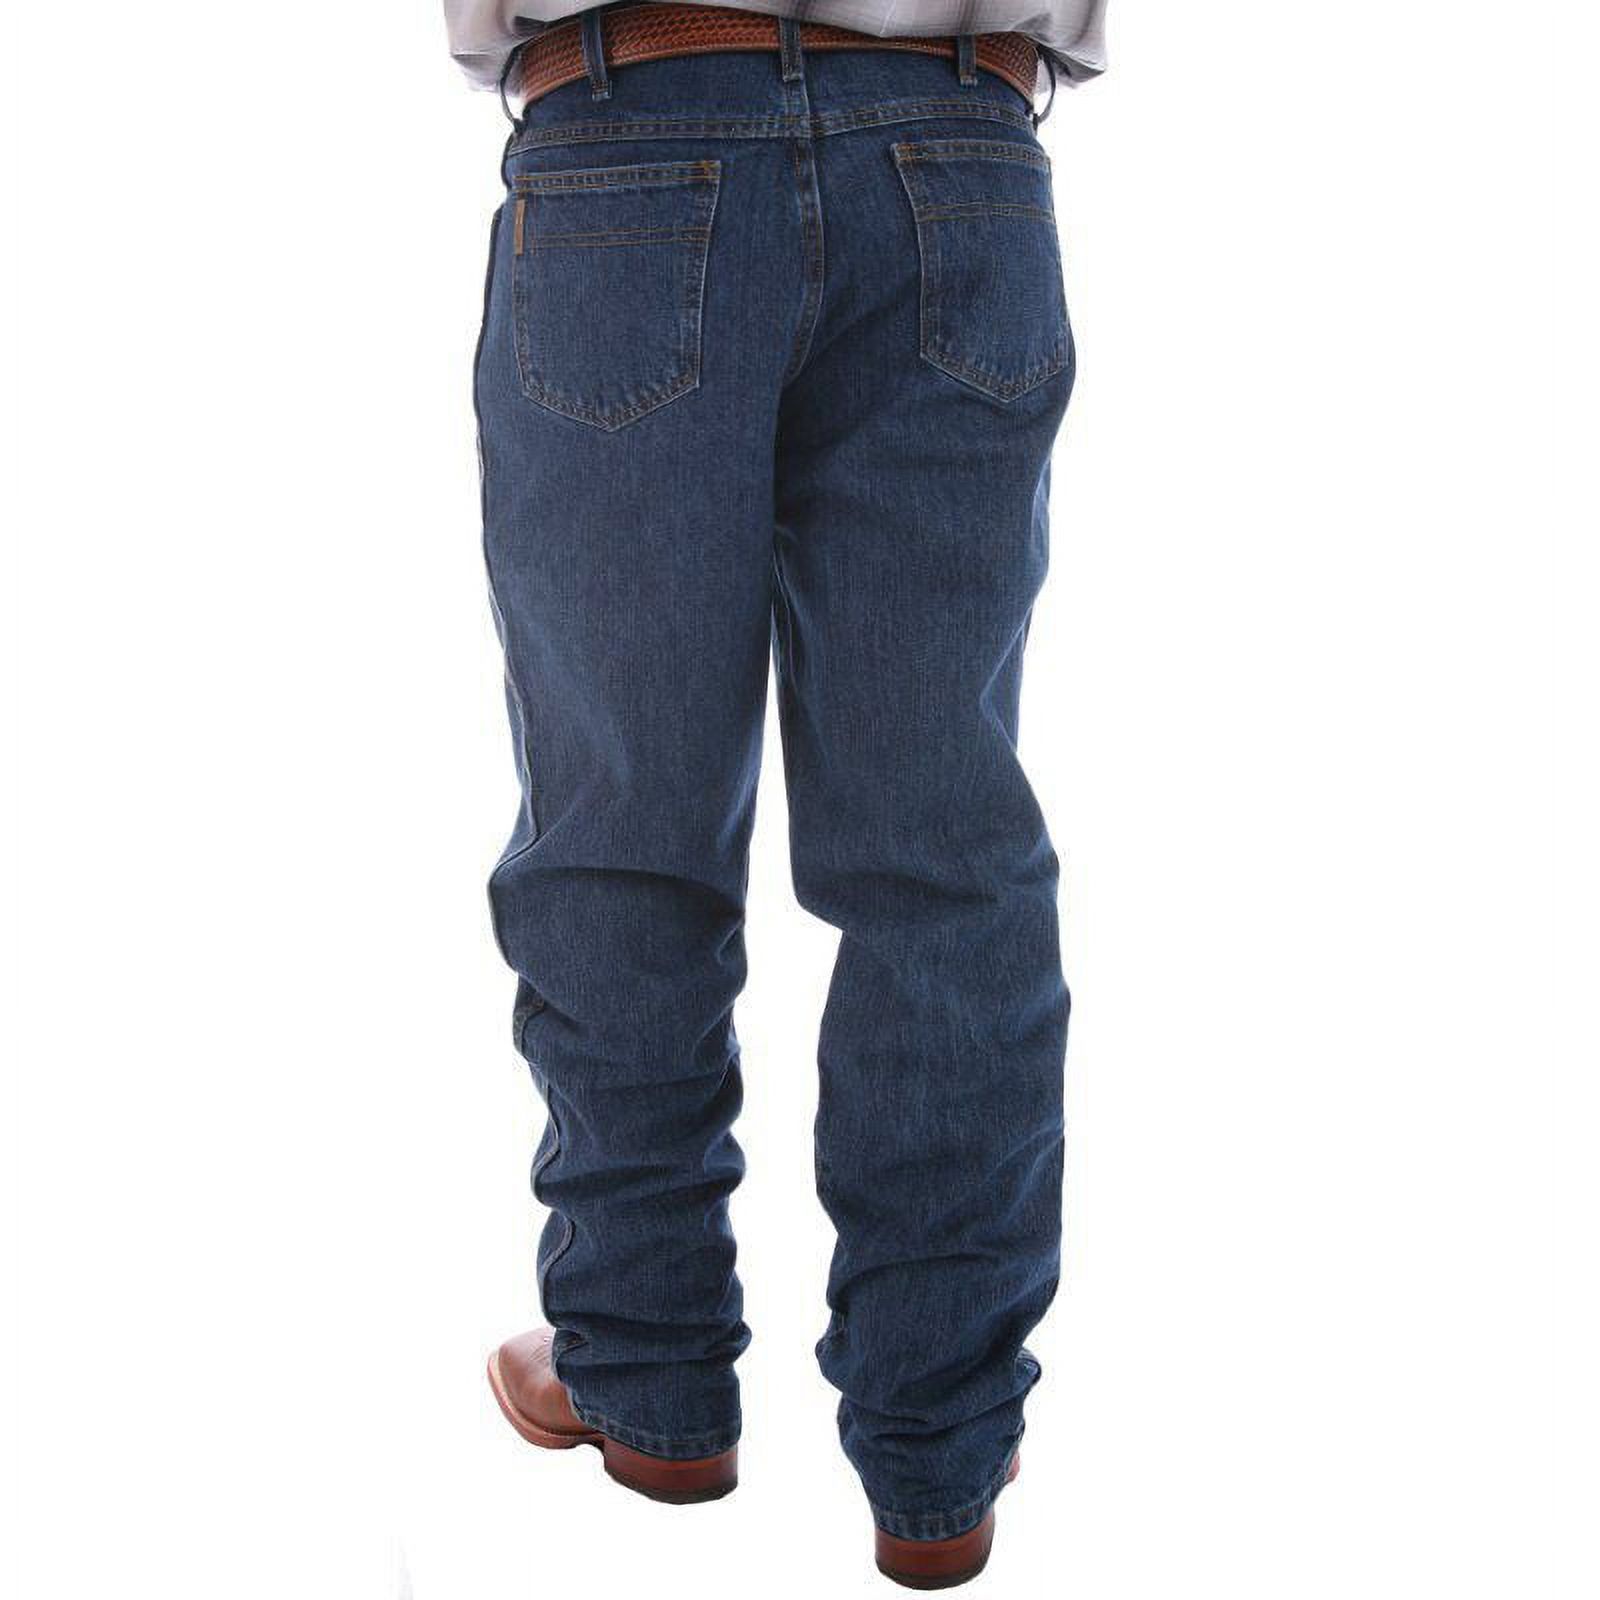 Cinch Apparel Mens Green Label Original Fit Jeans 35x30 Dark Stonewash - image 1 of 4